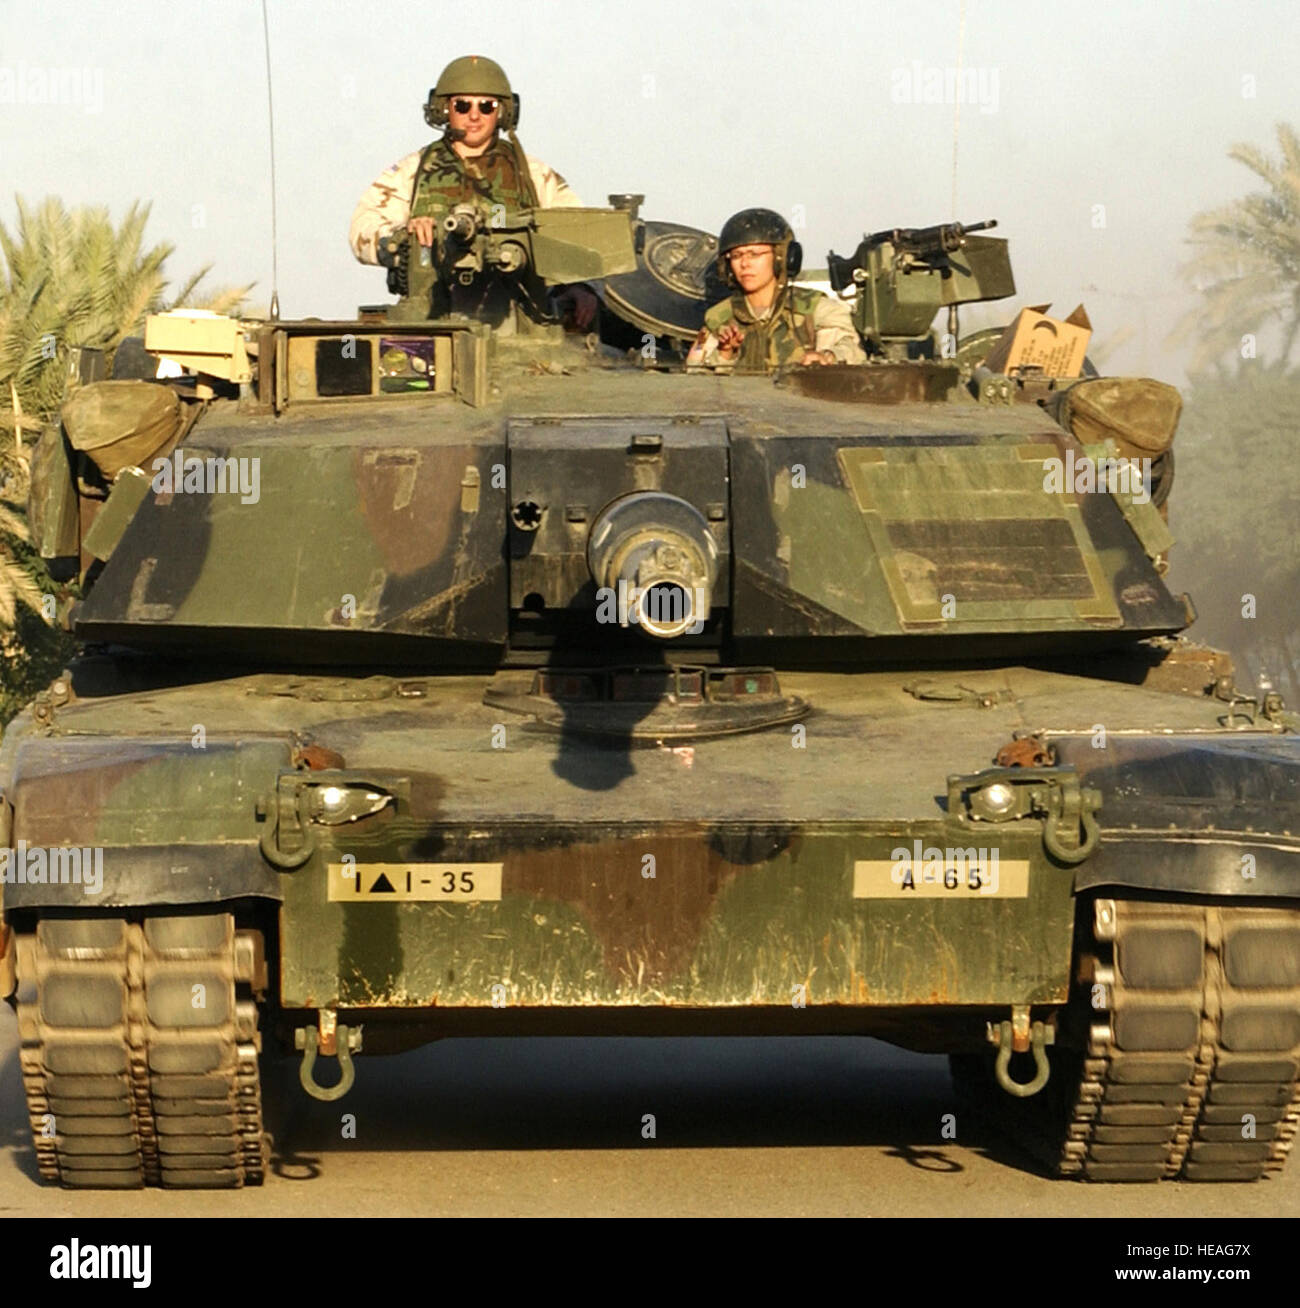 Army Tank - Military Presentos